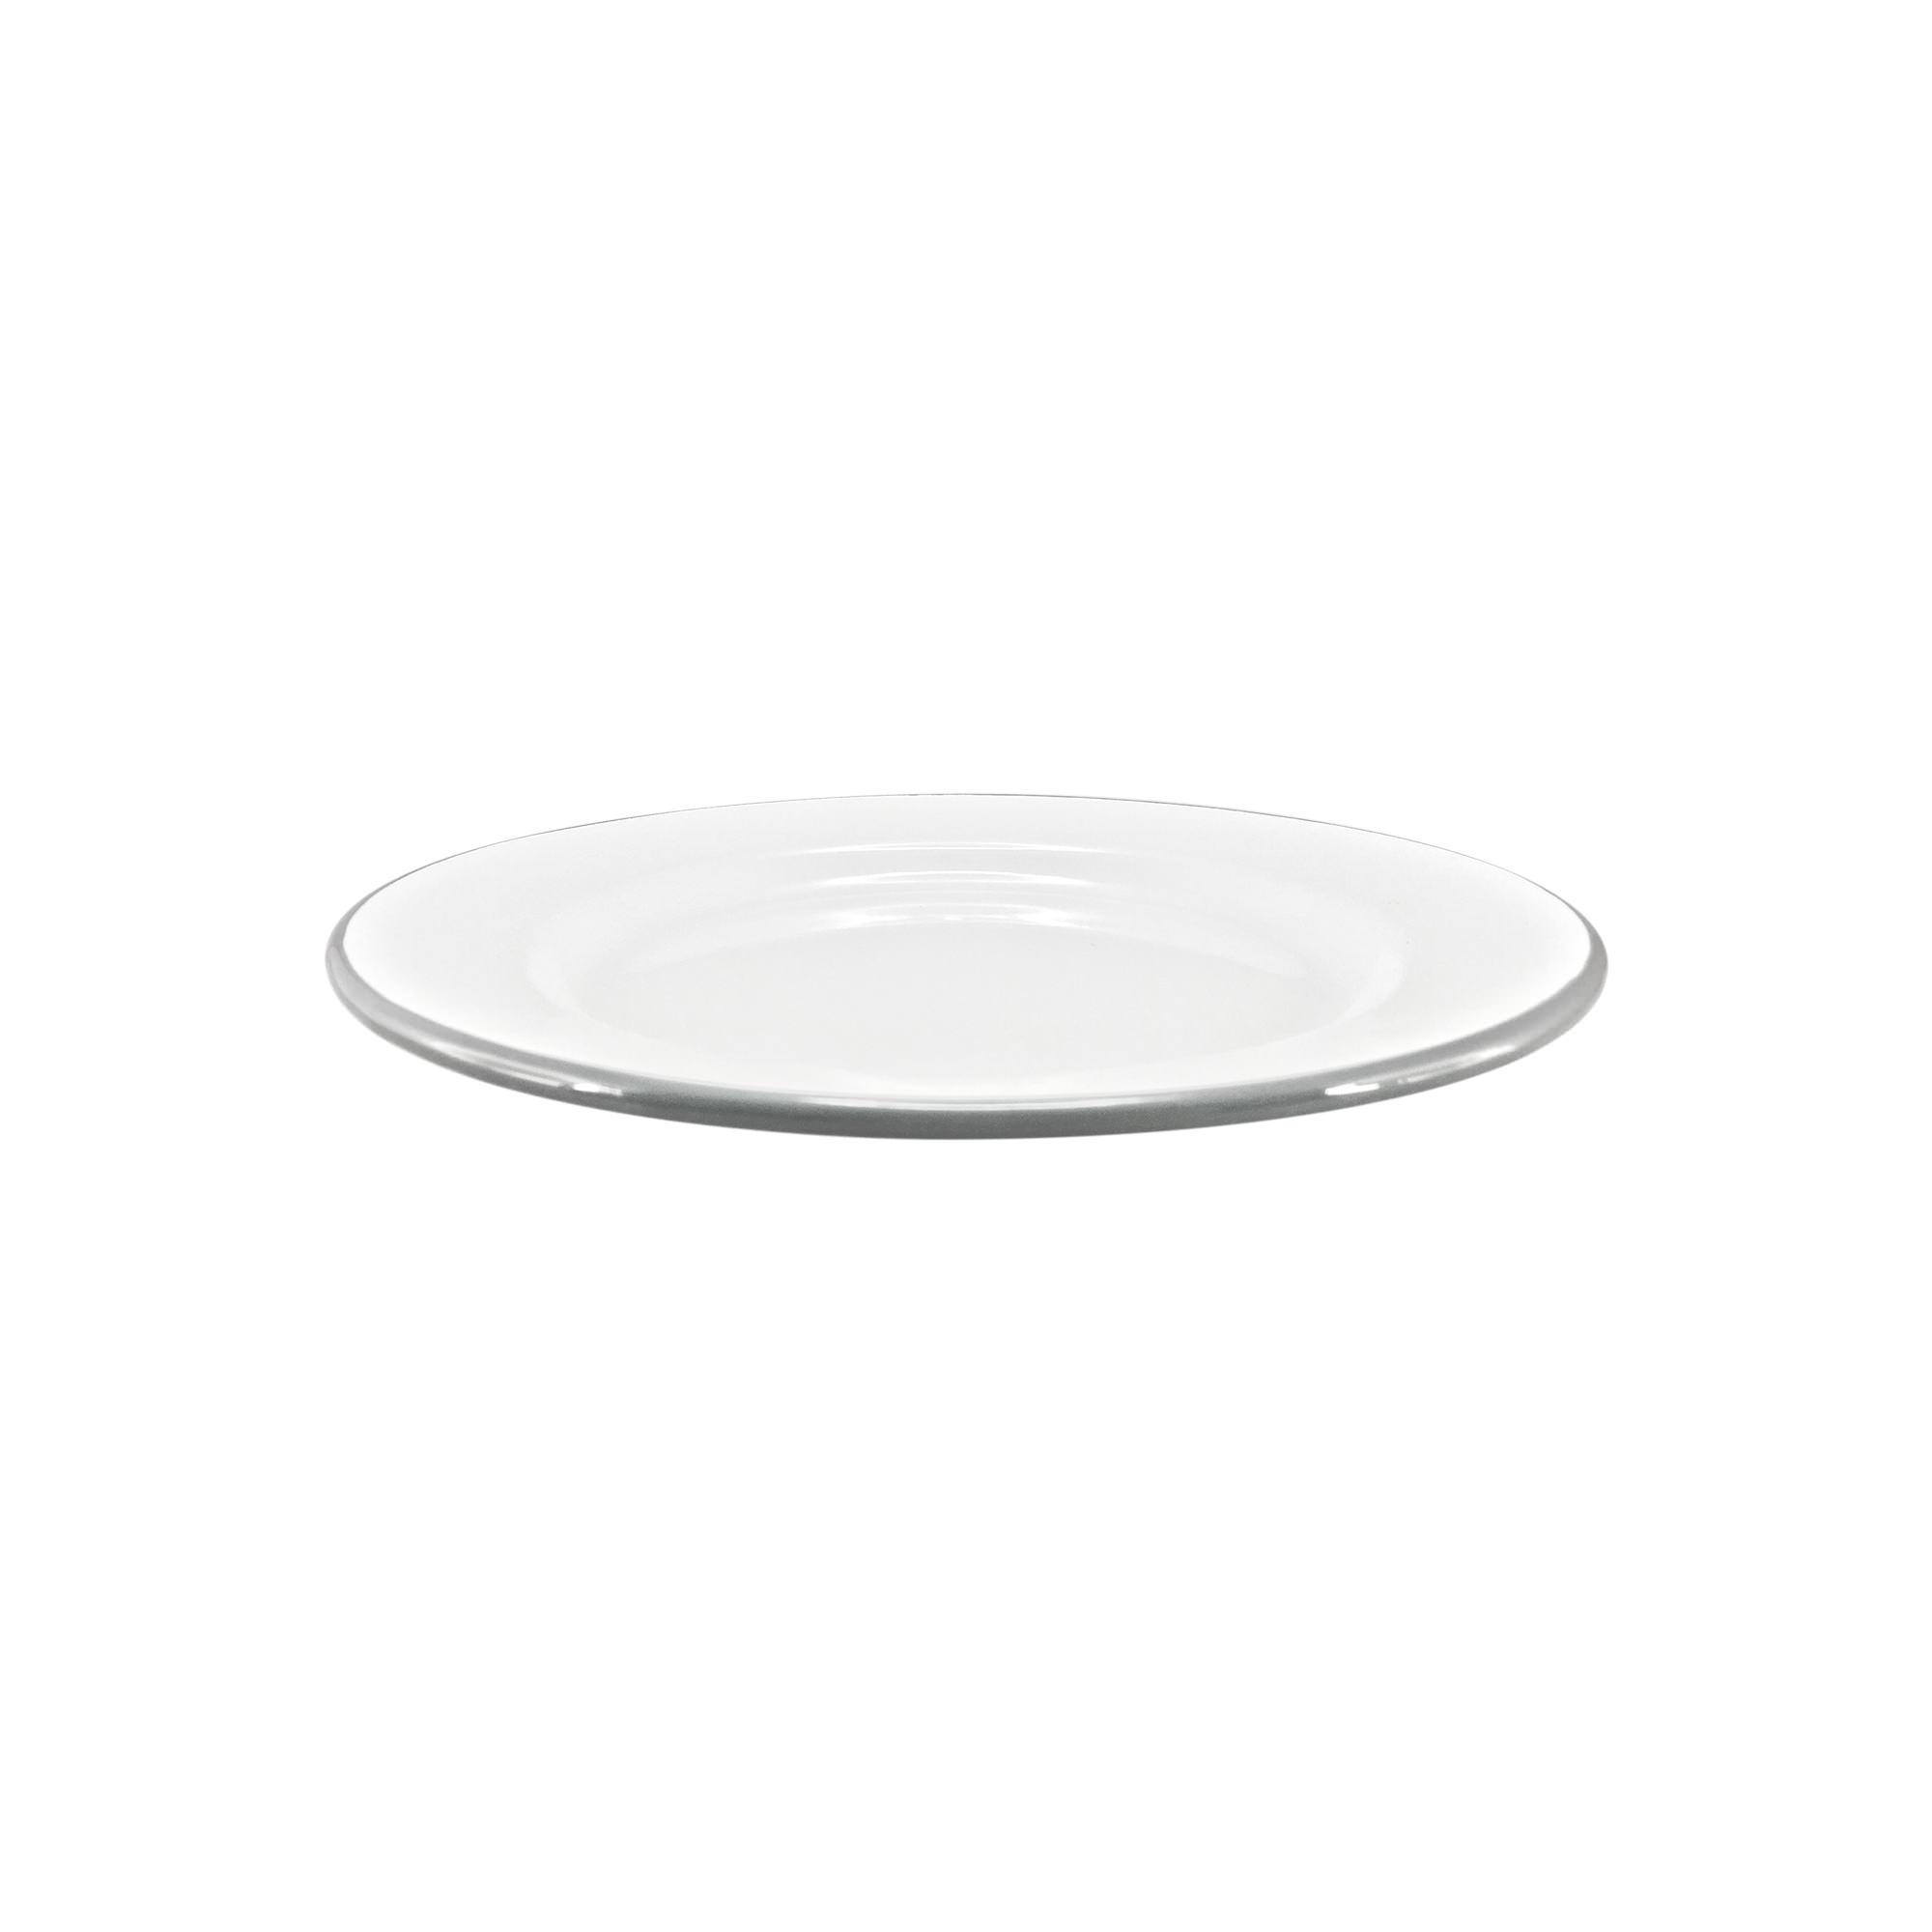 Falcon Enamelware Side Plate 20cm White/Grey Rim Image 1